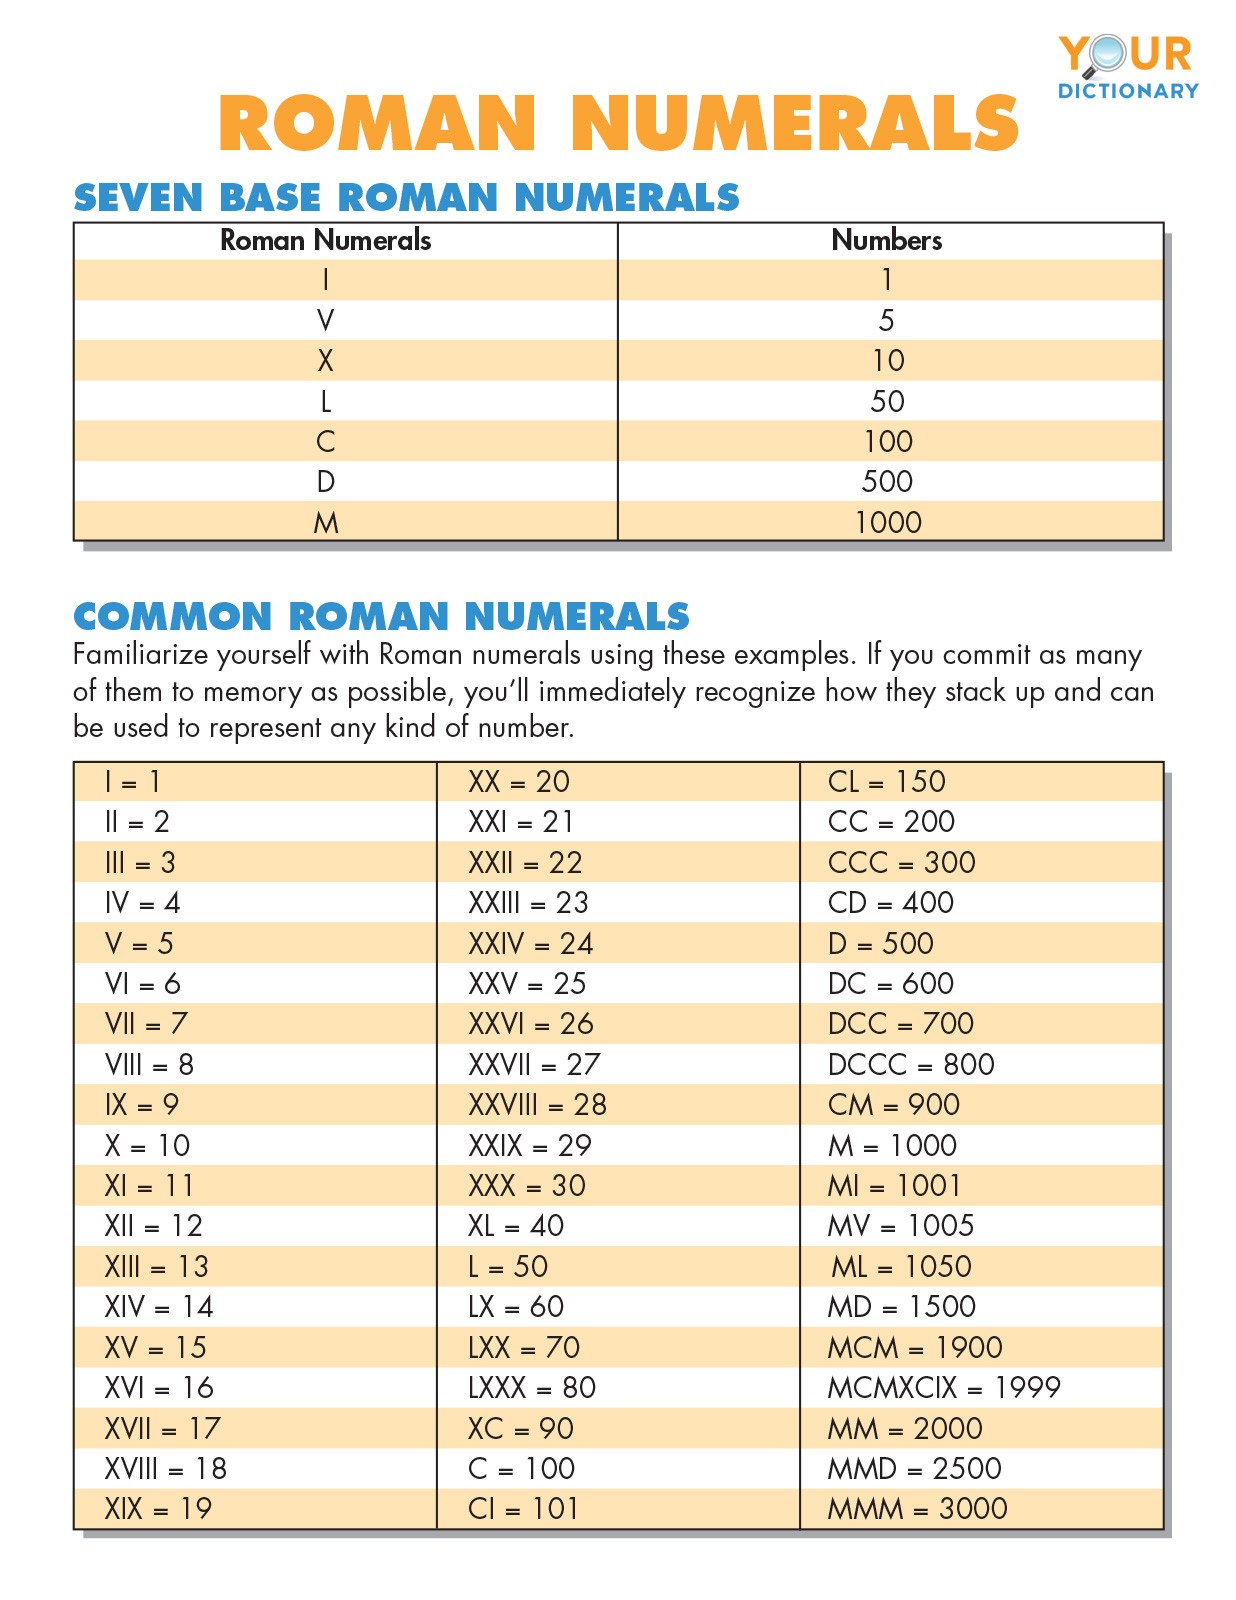 roman-numerals-chart-translation-tips-history